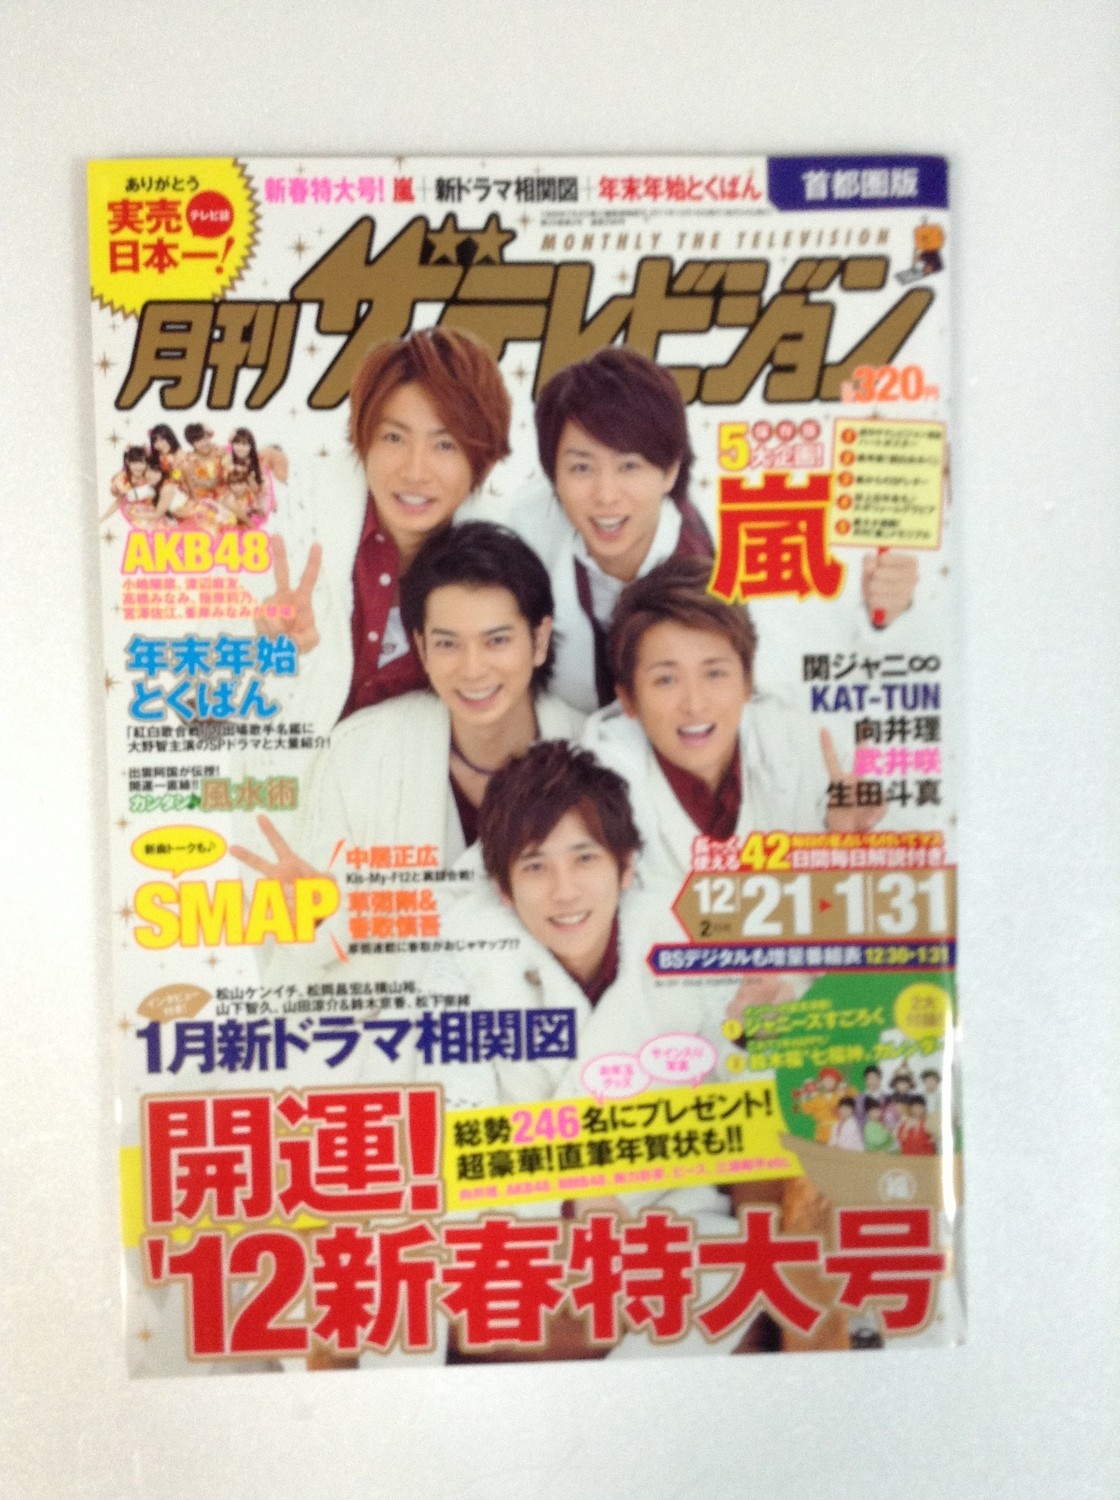 The Television Monthly Magazine featuring Arashi